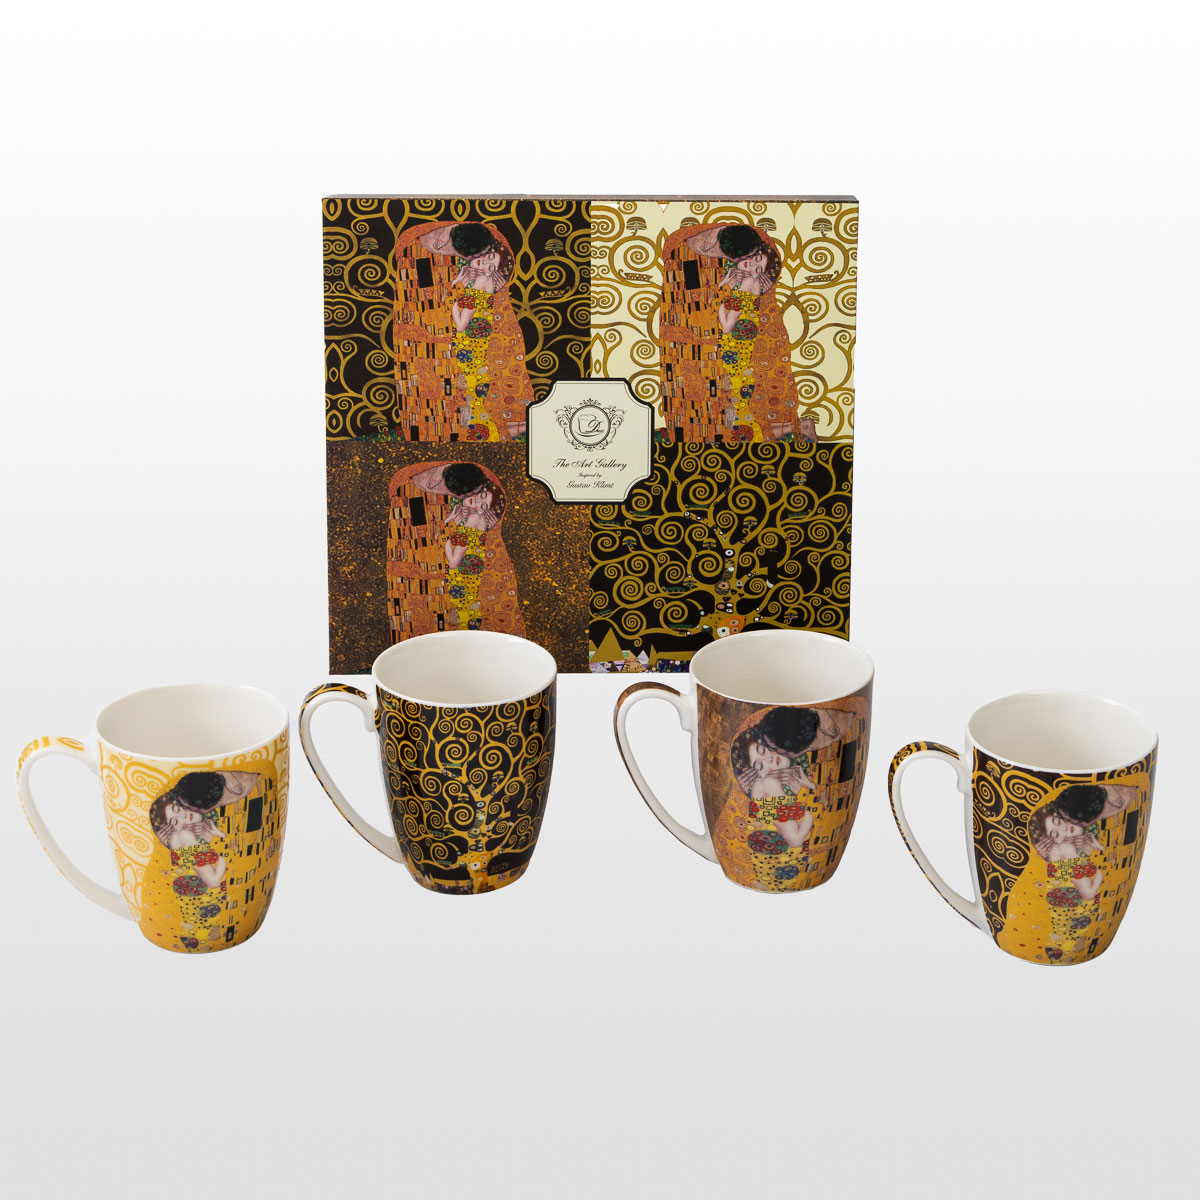 4 tazze Gustav Klimt (in una scatola regalo), dettaglio n°1